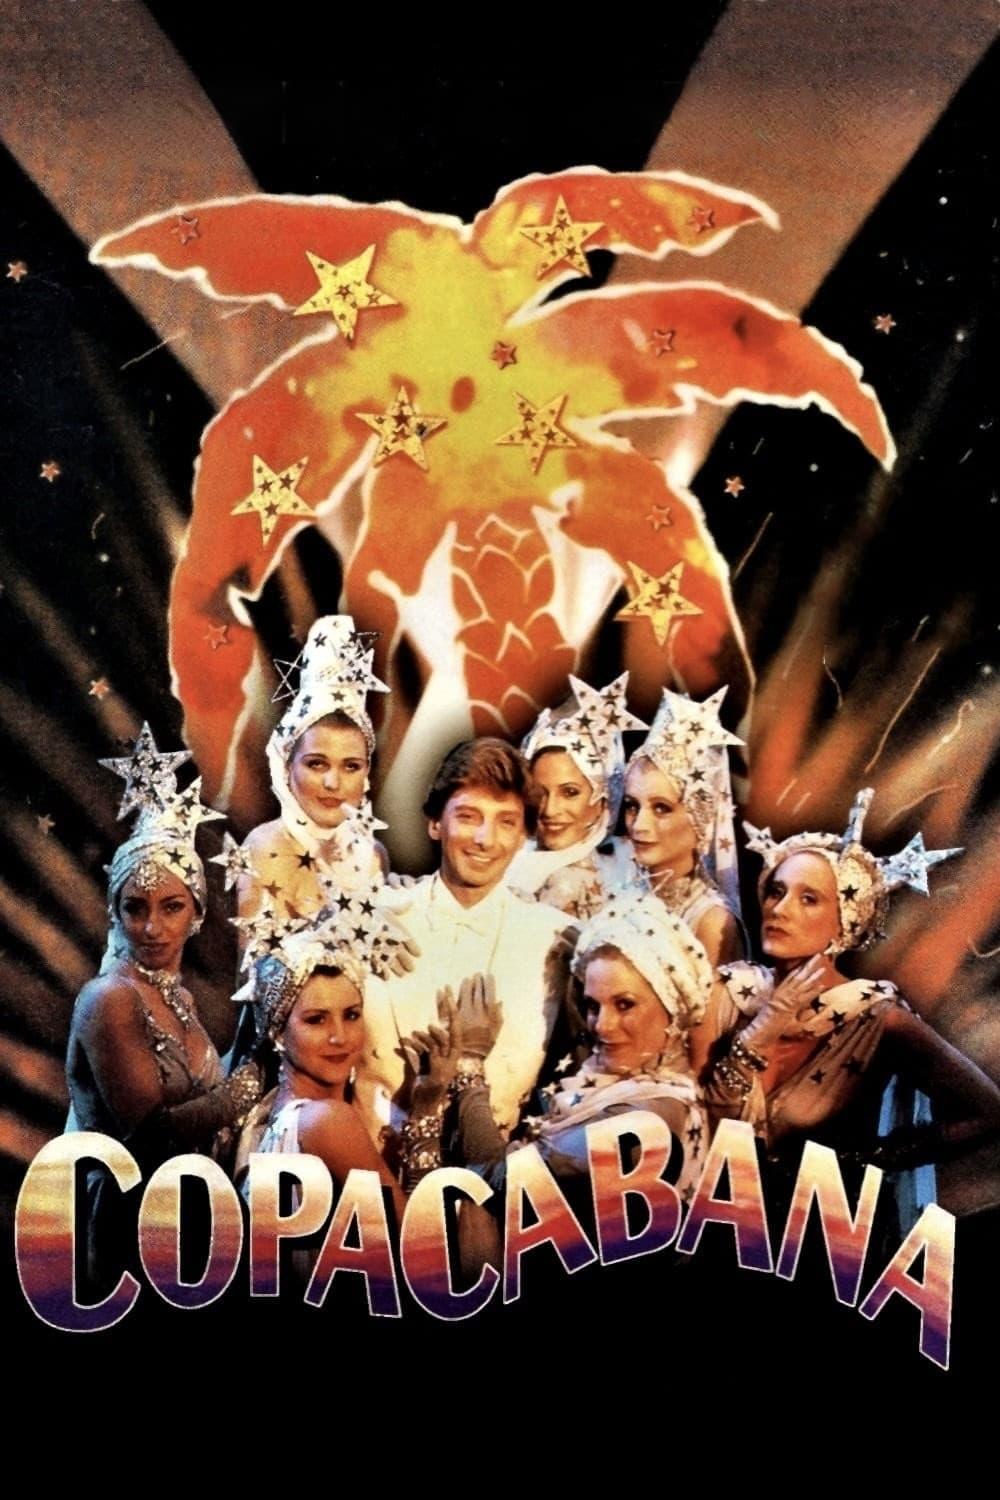 Copacabana poster